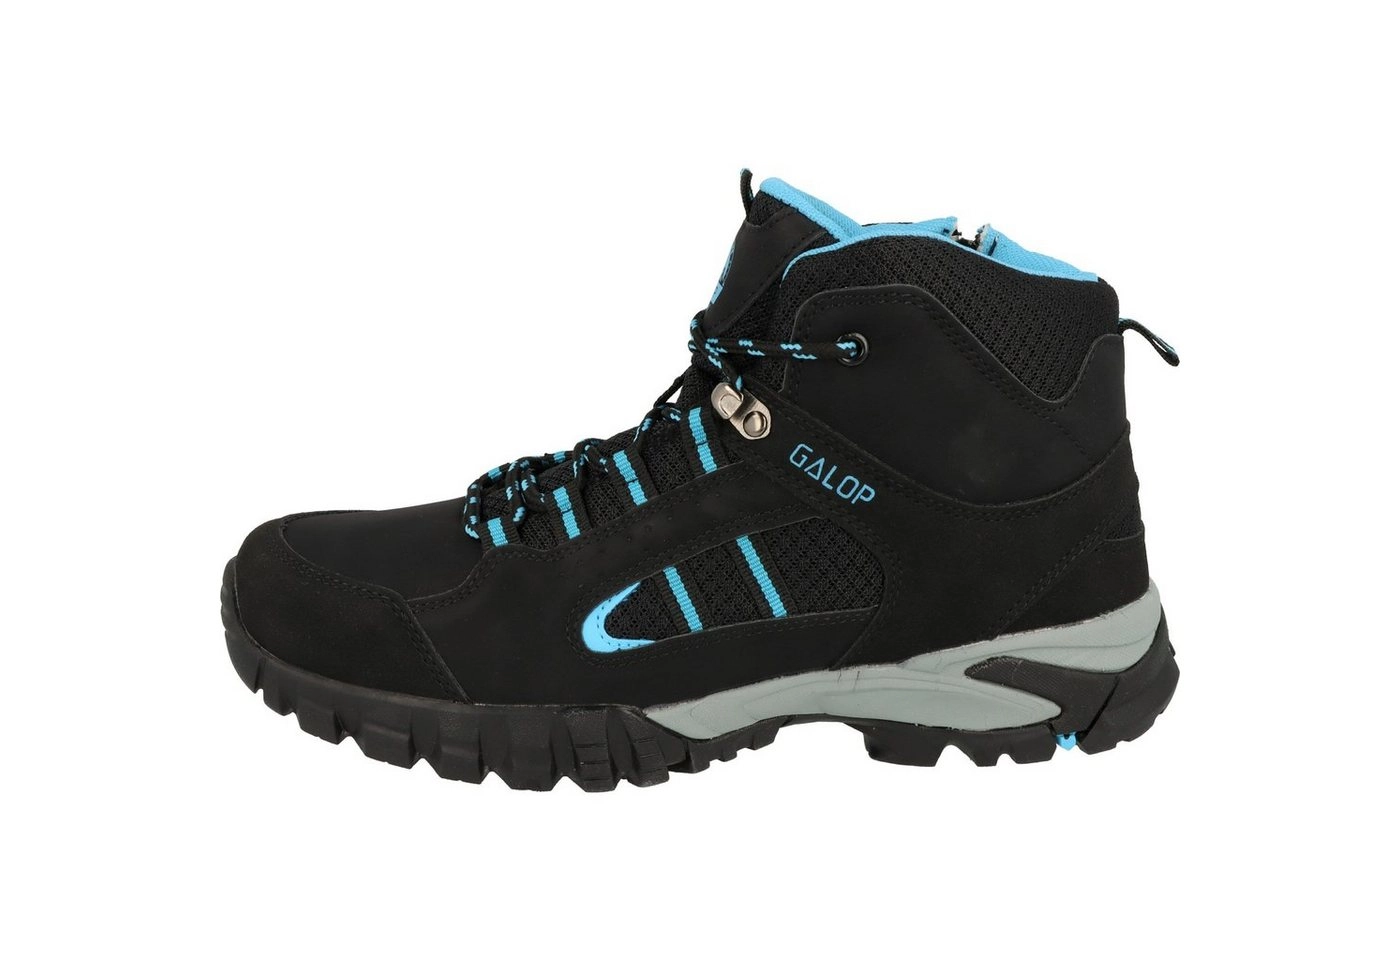 Galop »Damen Schuhe Trekking Boots Stiefel Schnürer L34501.802 Schwarz« Trekkingschuh